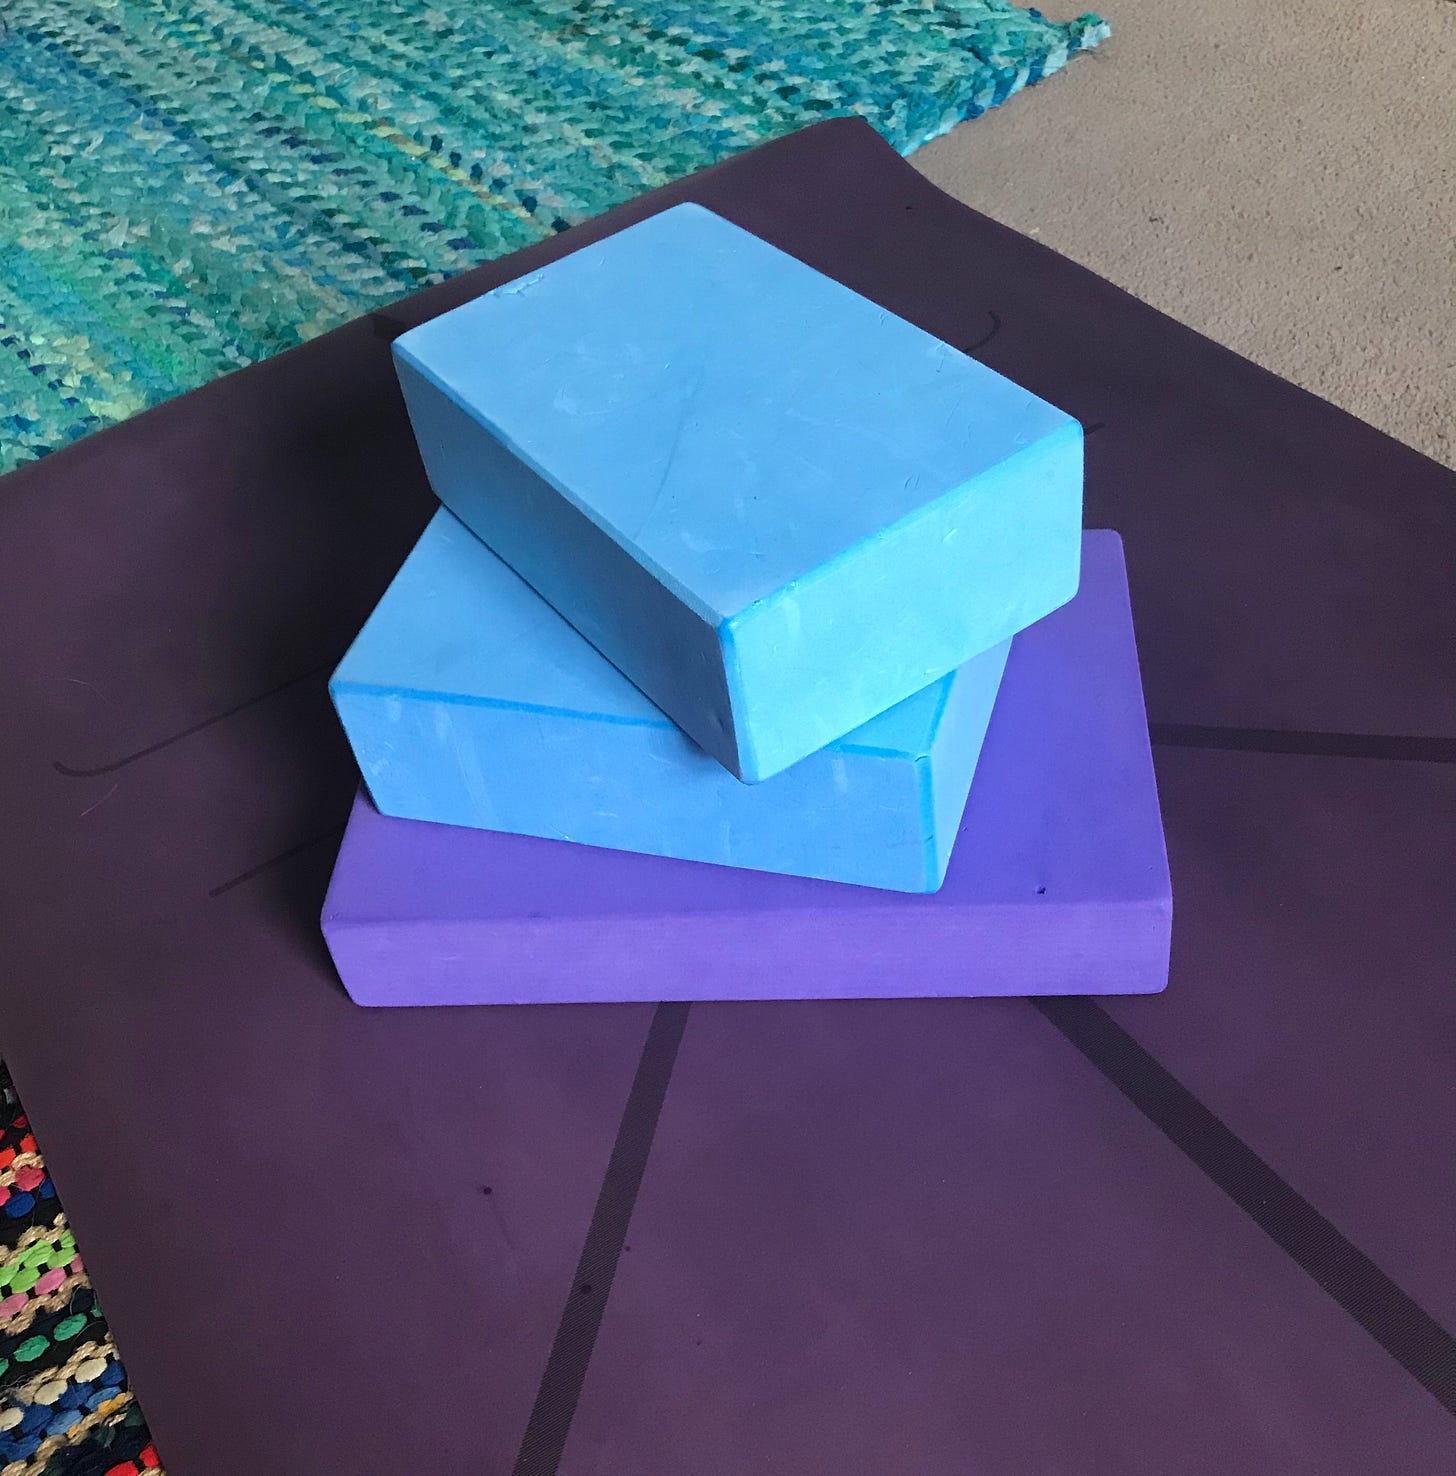 A purple yoga brick and two blue yoga blocks sitting piled on top of a dark purple yoga mat